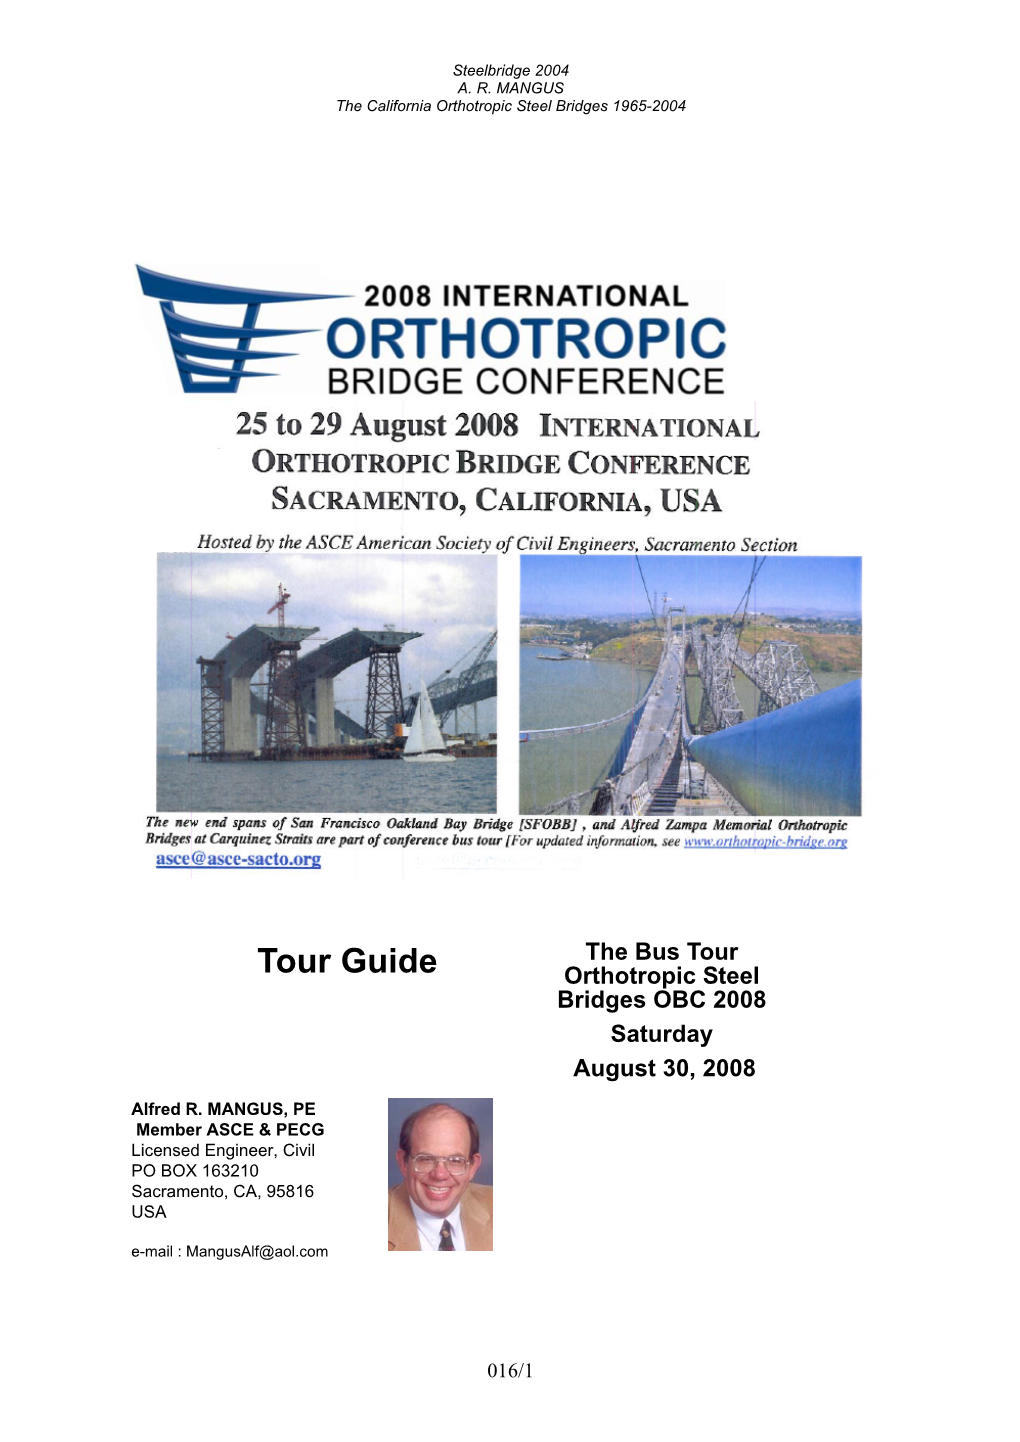 Tour Guide Orthotropic Steel Bridges OBC 2008 Saturday August 30, 2008